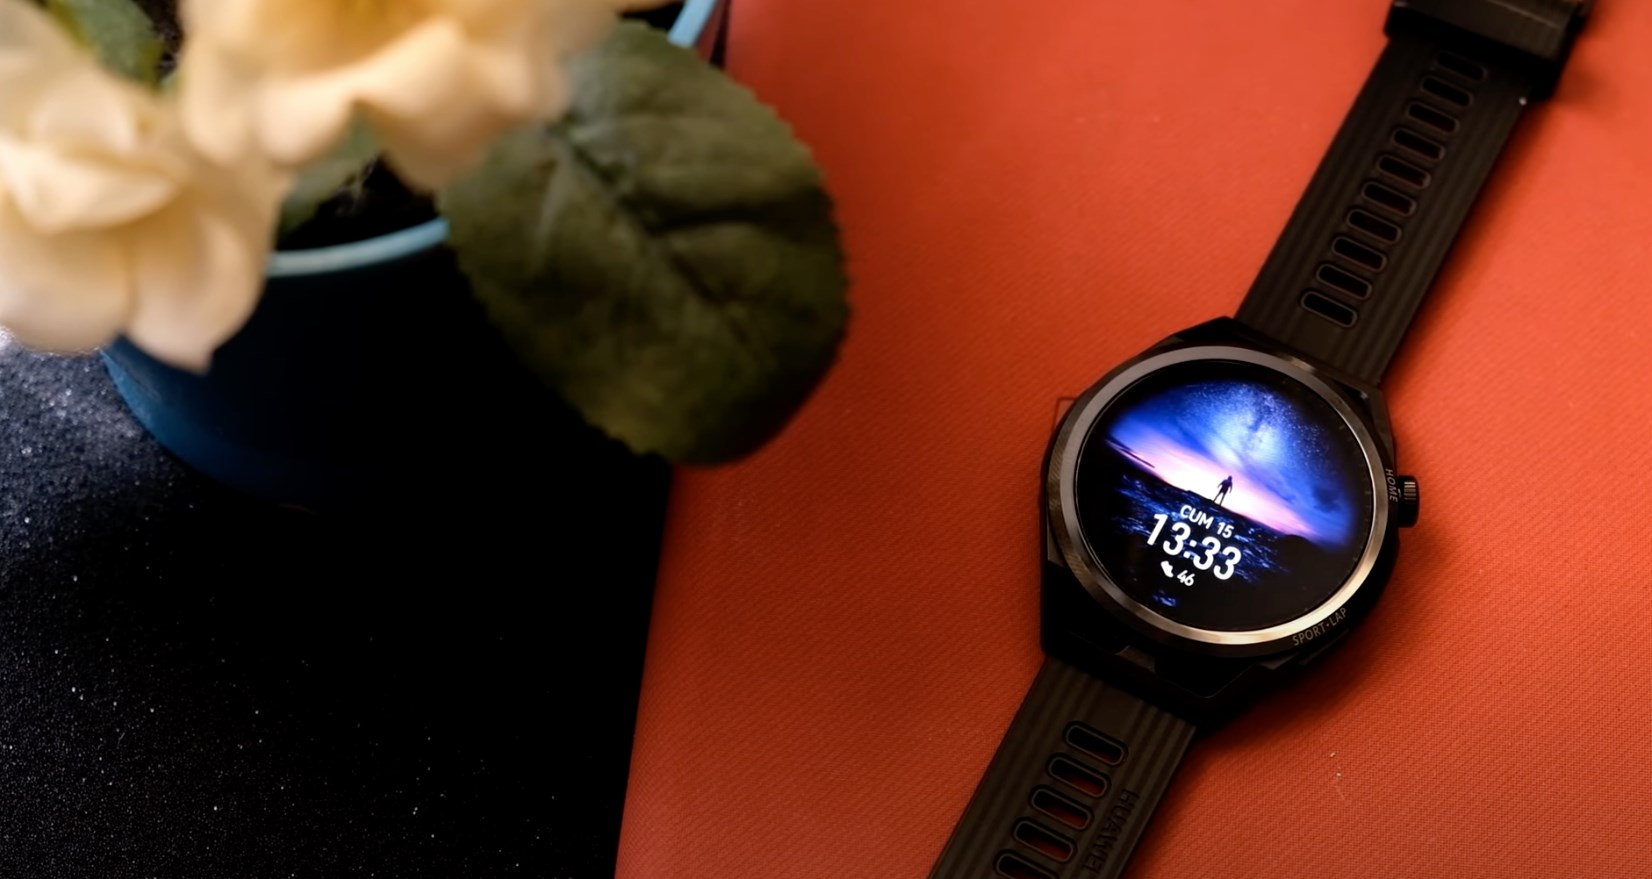 Huawei'den sporculara özel akıllı saat - Huawei Watch GT Runner!